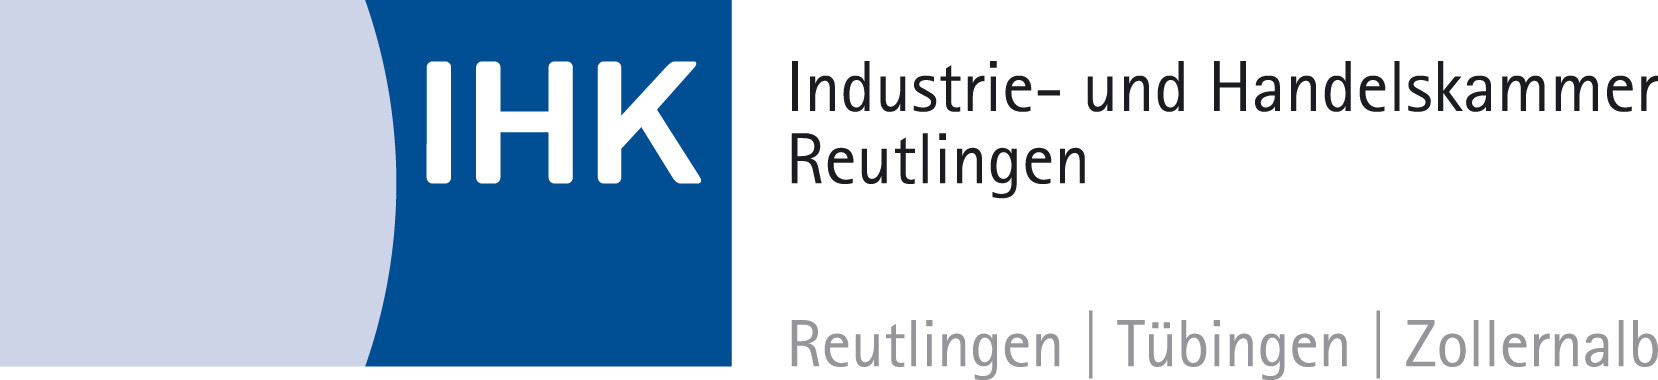 Logo c/o Industrie- und Handelskammer Reutlingen